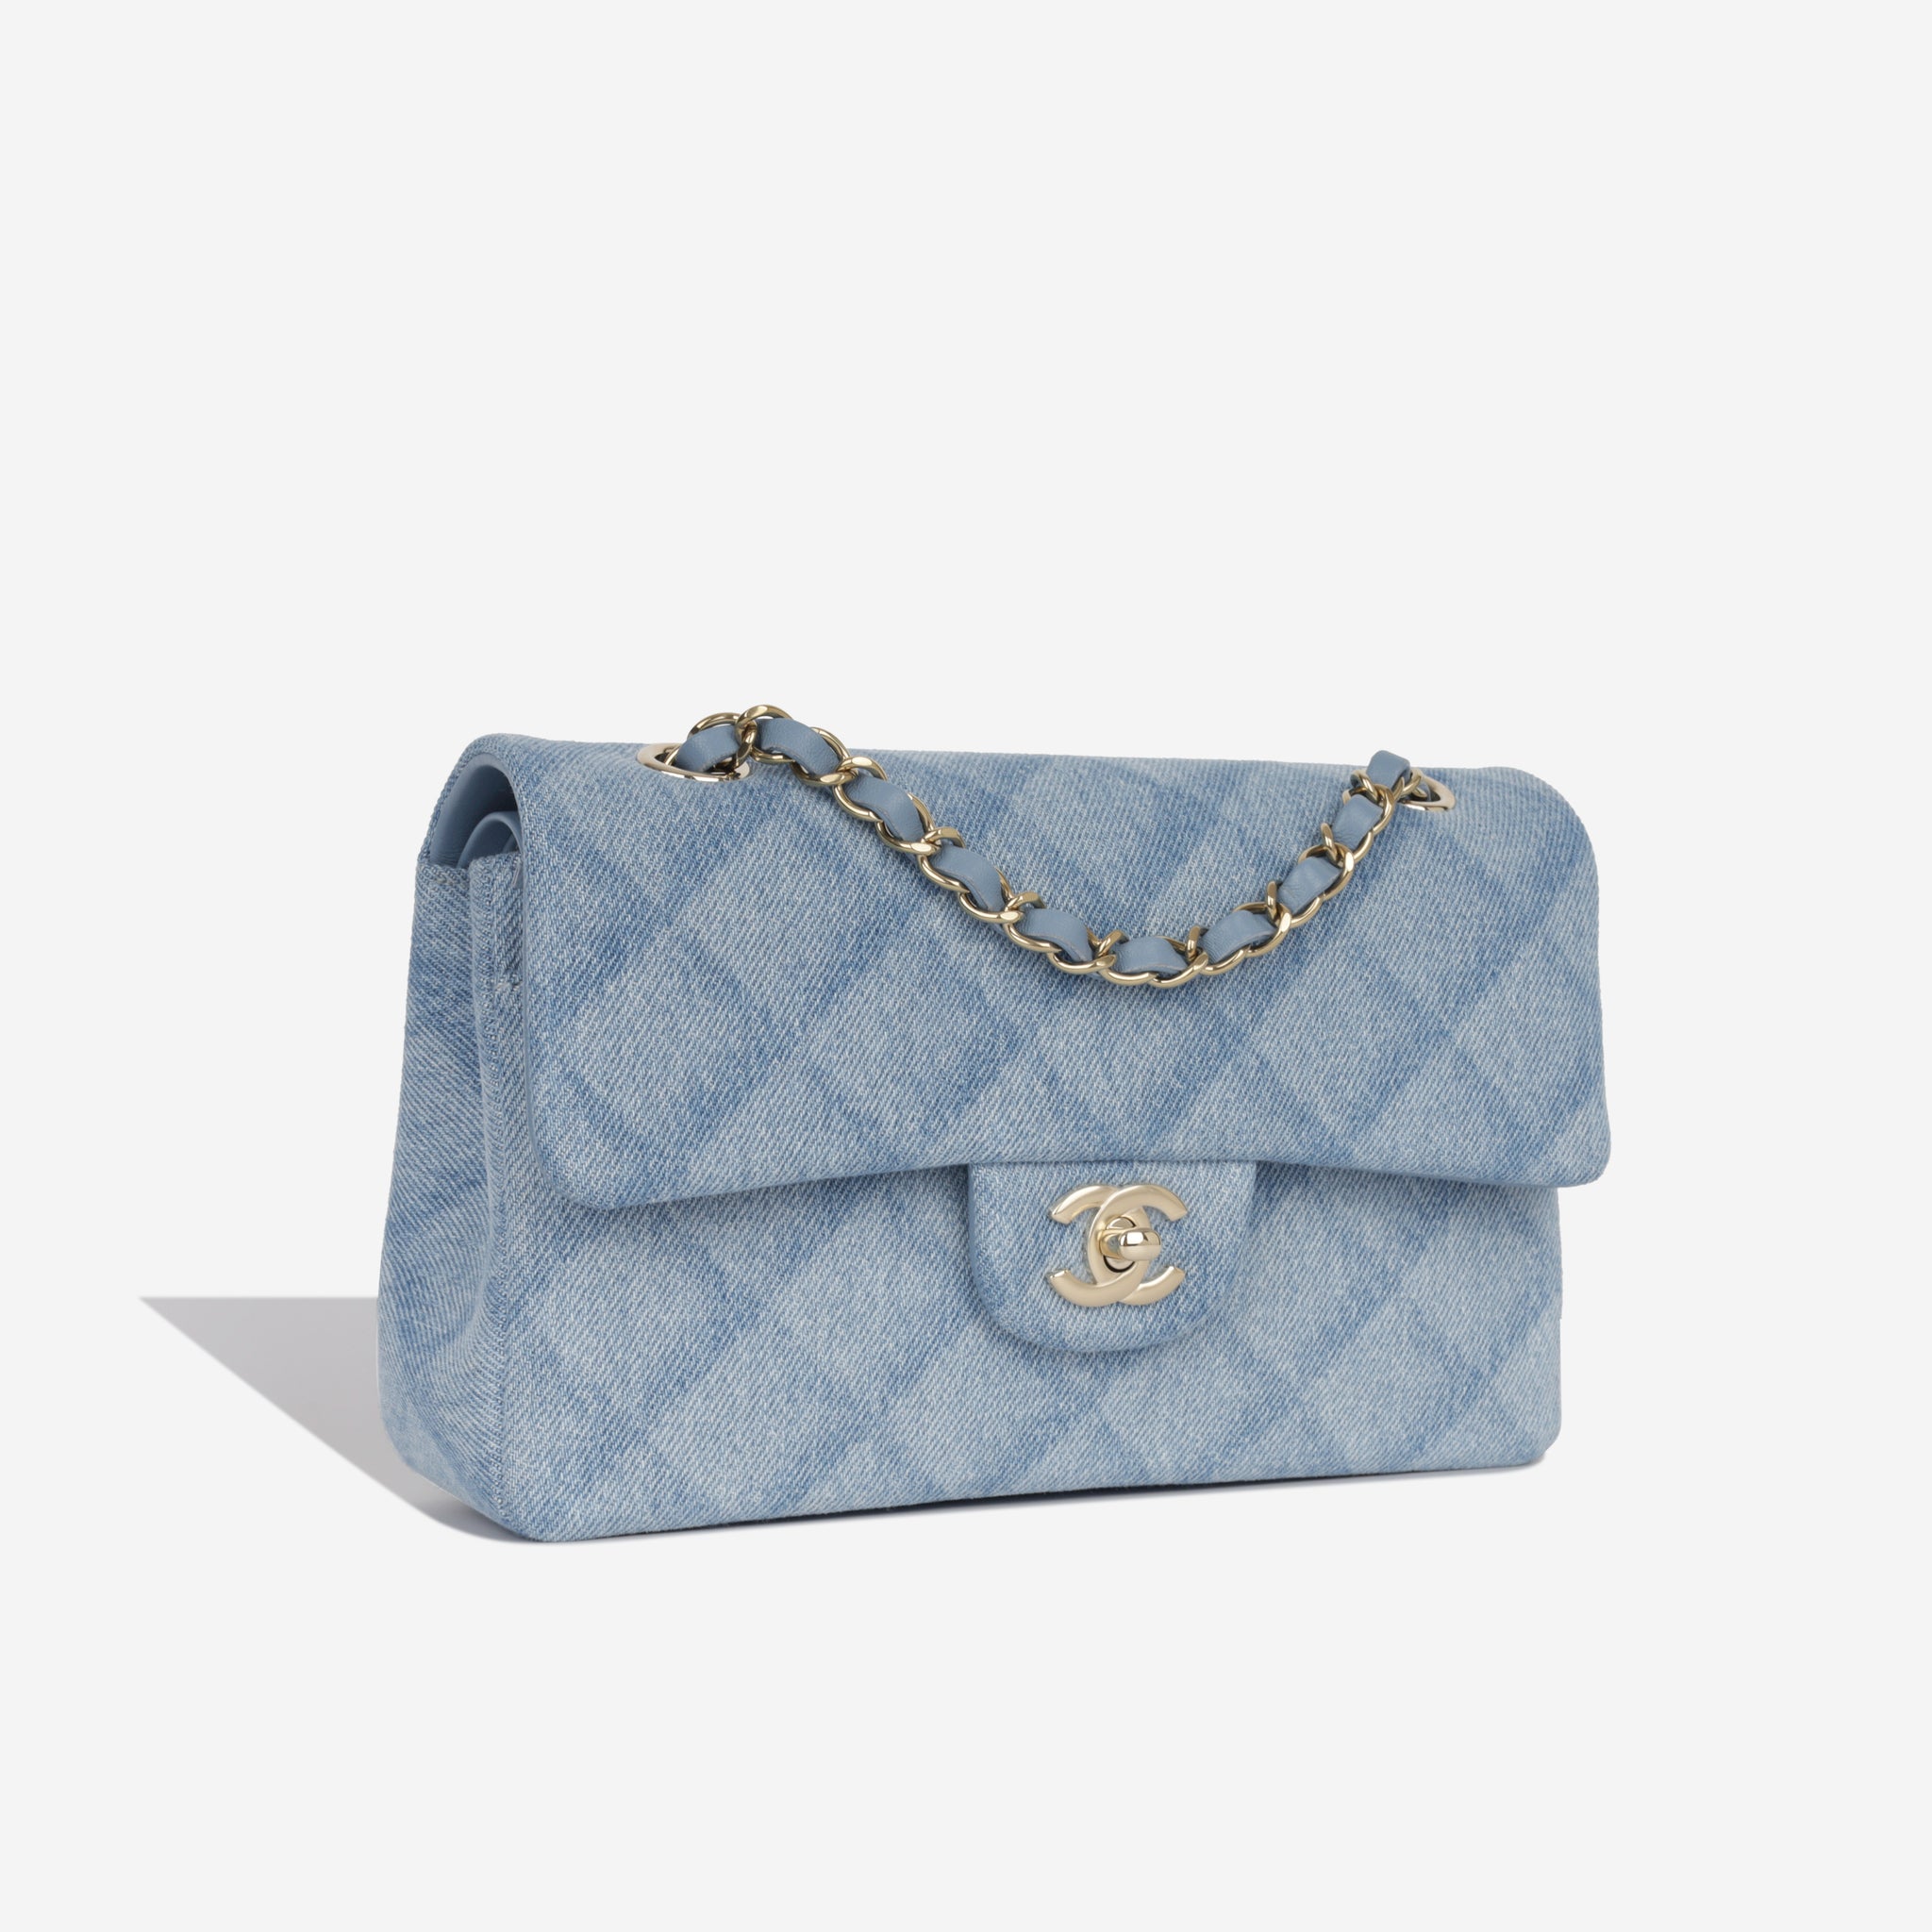 Chanel Blue Denim Paris Dallas Flap Bag Aged Silver Hardware, 2014